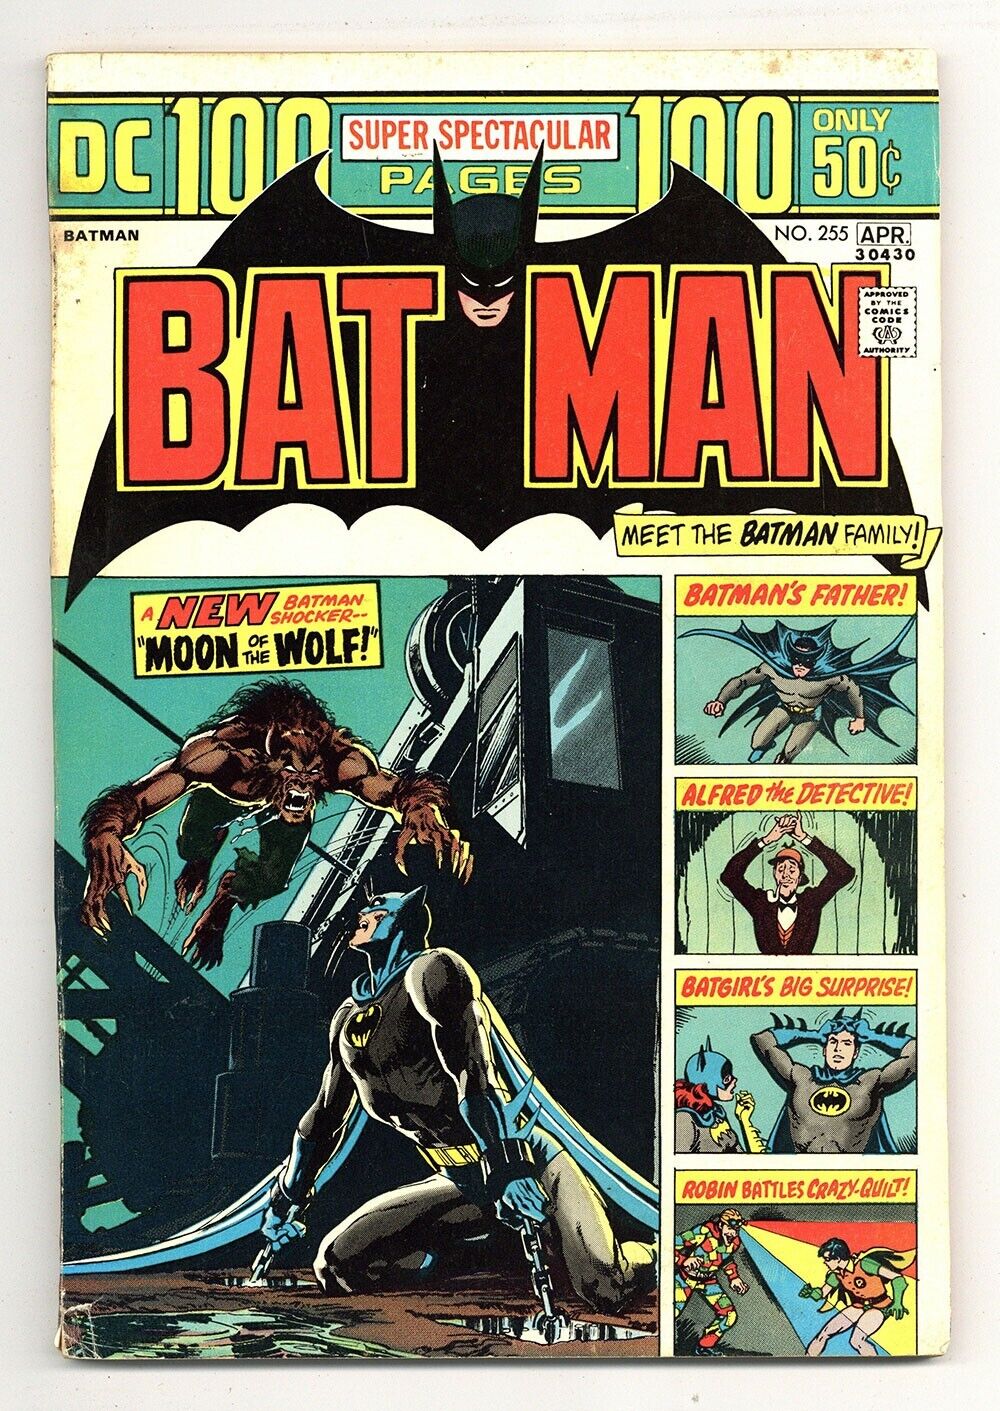 BATMAN #255 4.5 NEAL ADAMS ART 100 PAGE SPECTACULAR OW PGS 1974